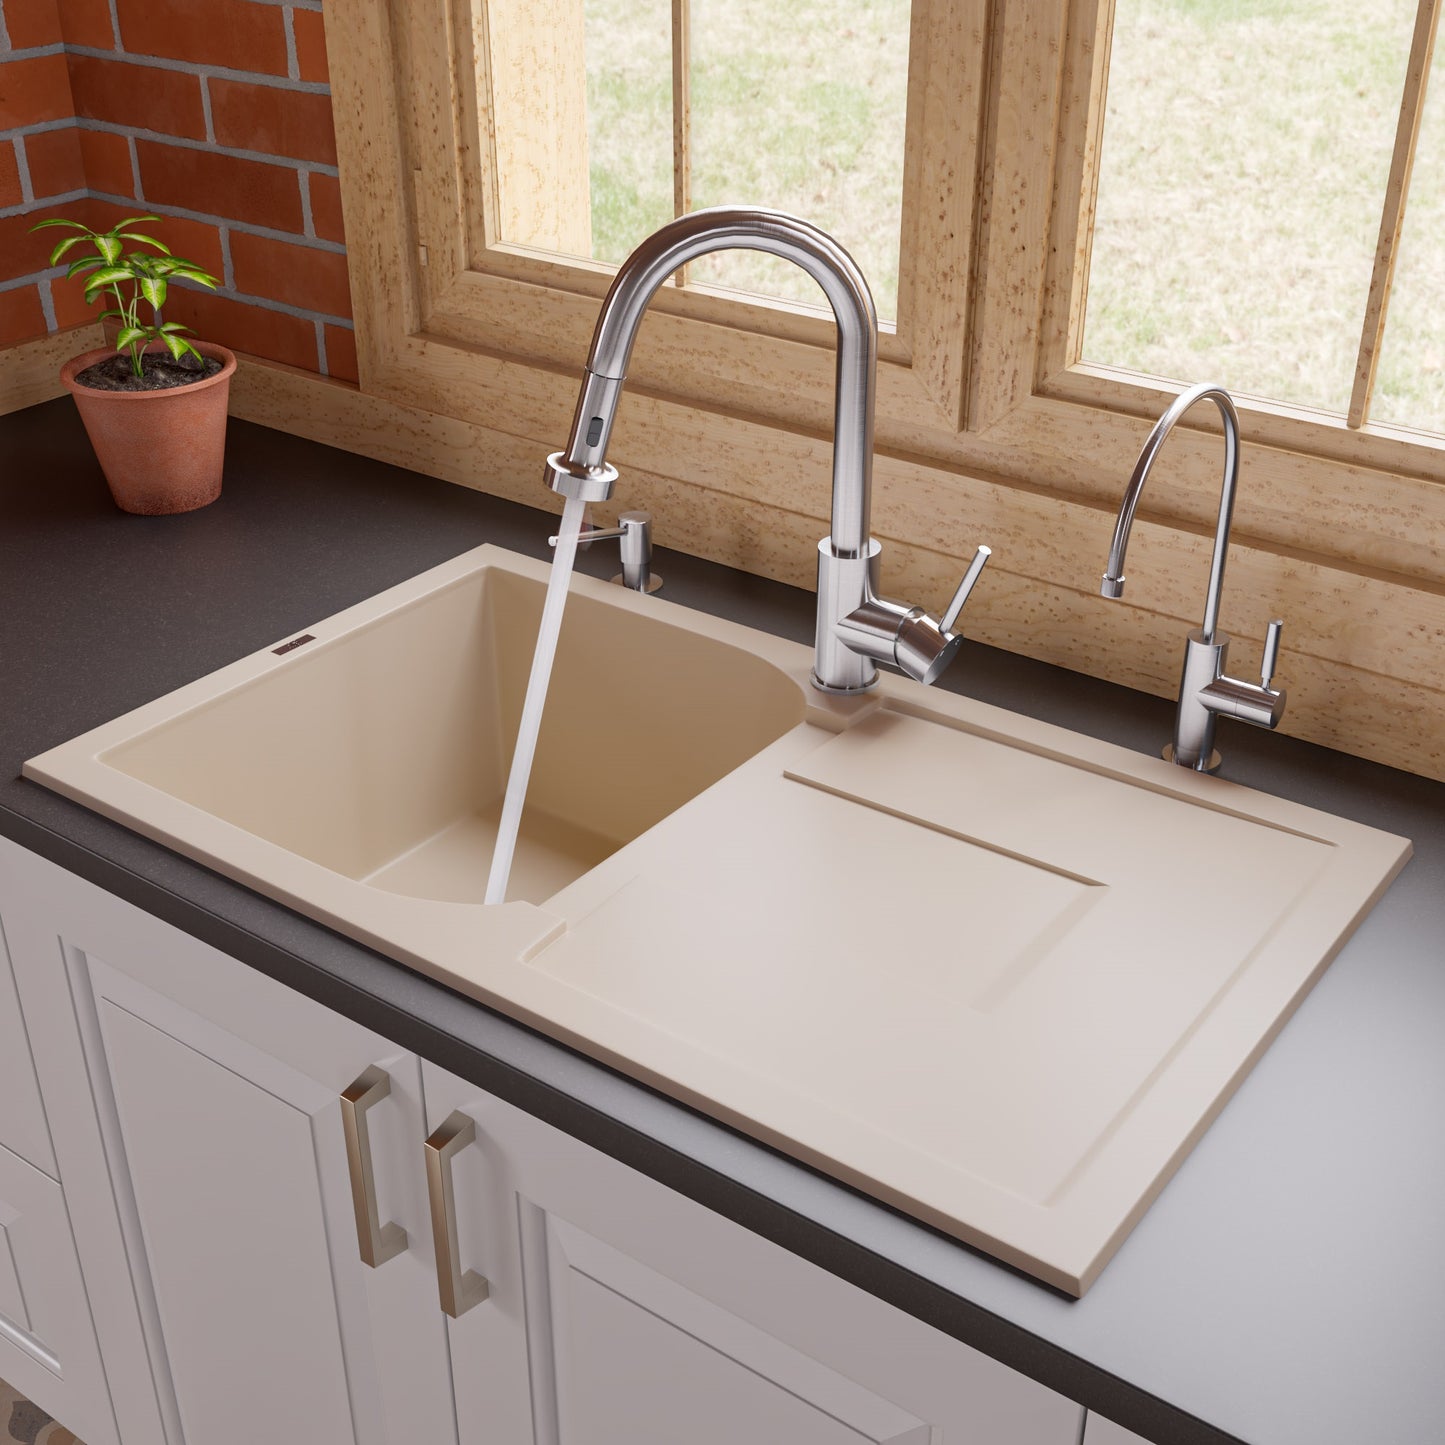 Alfi brand AB1620DI 34" Single Bowl Granite Composite Kitchen Sink with Drainboard Kitchen Sink ALFI brand Biscuit  